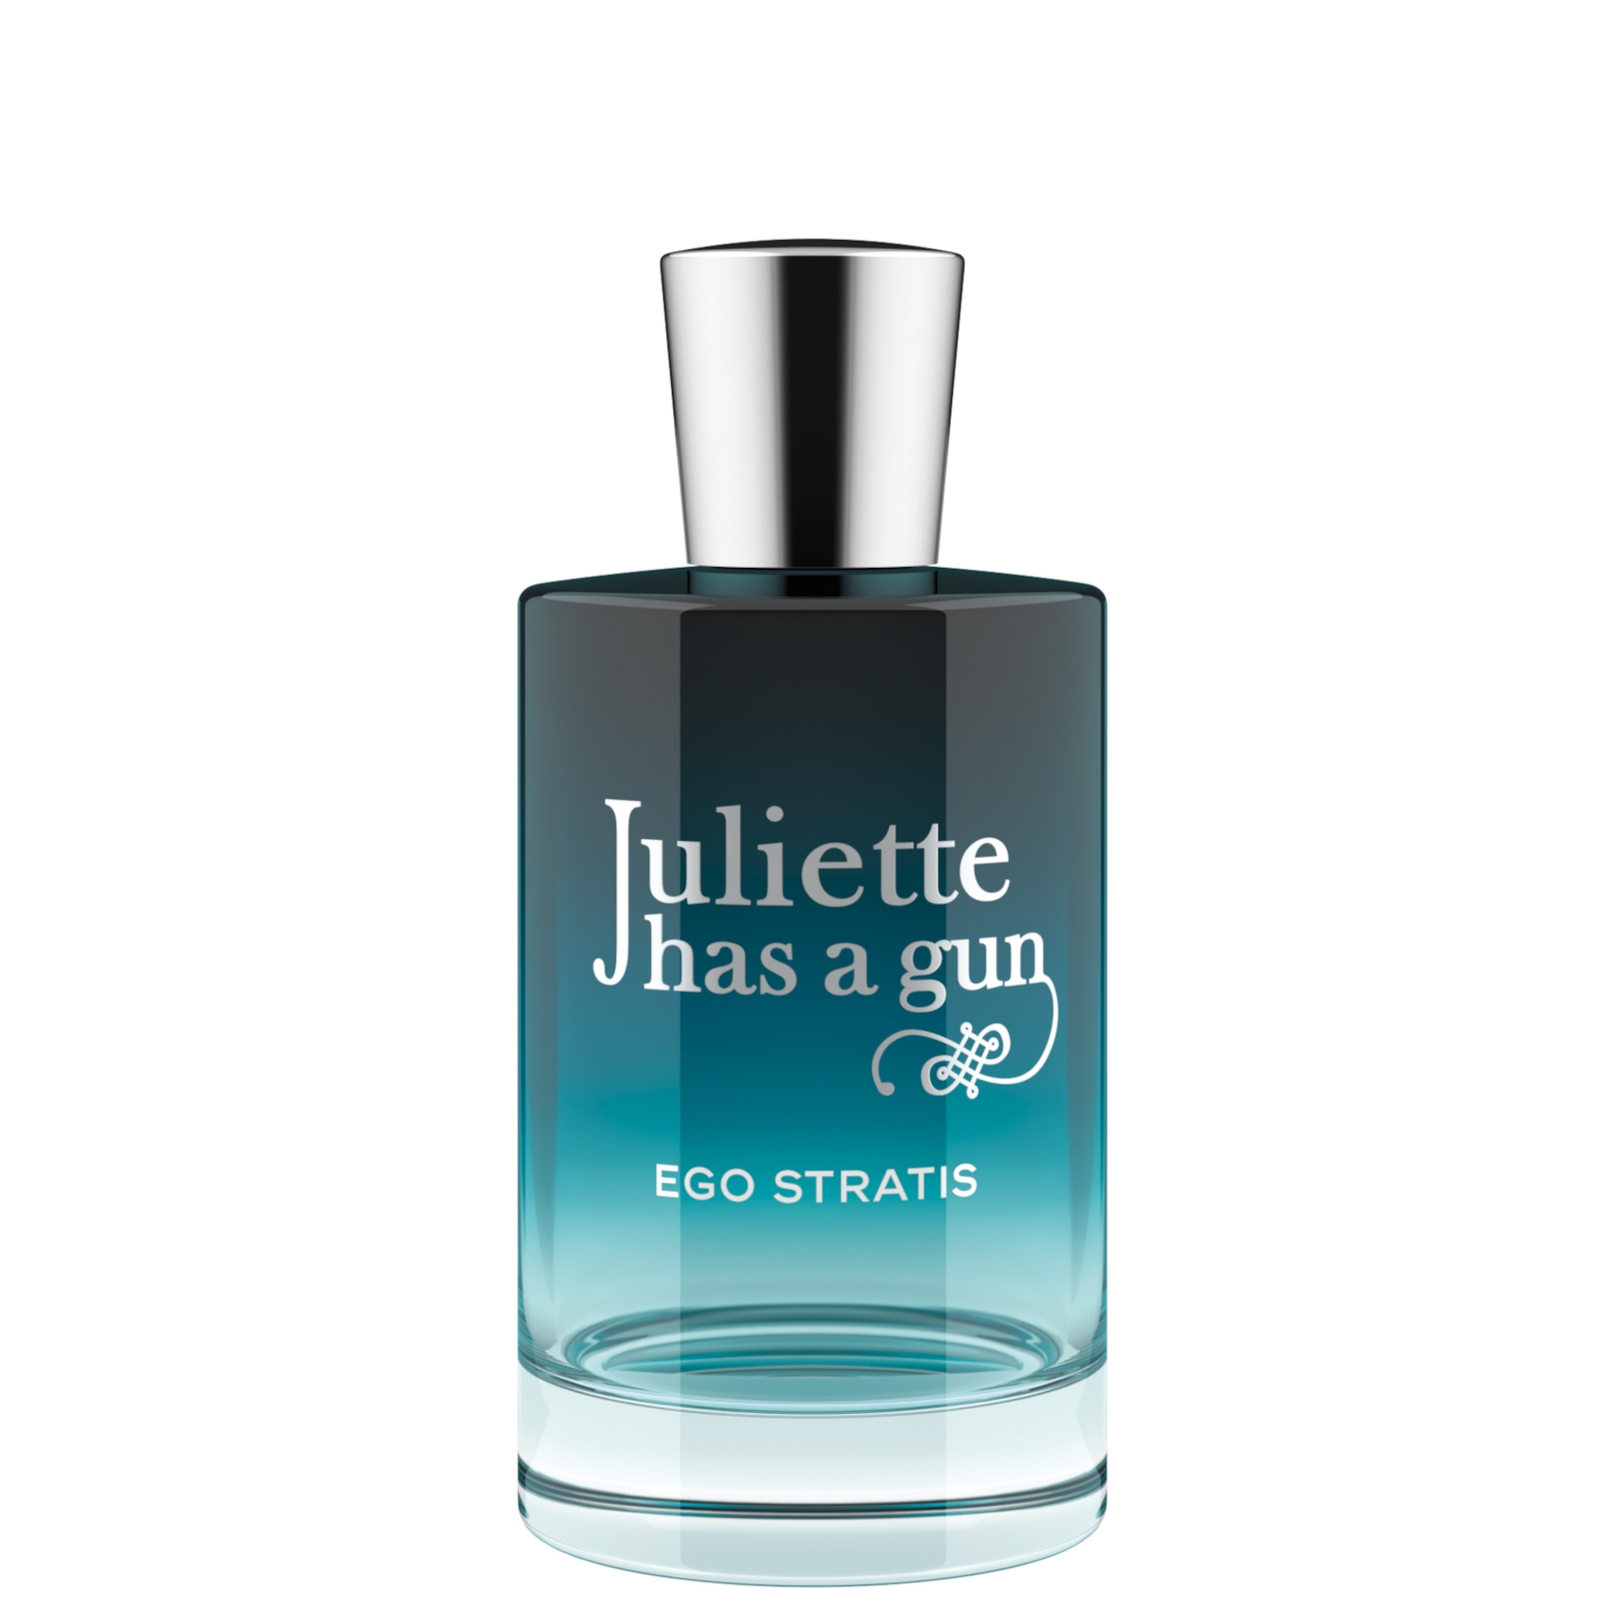 Photos - Women's Fragrance Juliette Has a Gun Ego Stratis Eau de Parfum 100ml JEGO100 